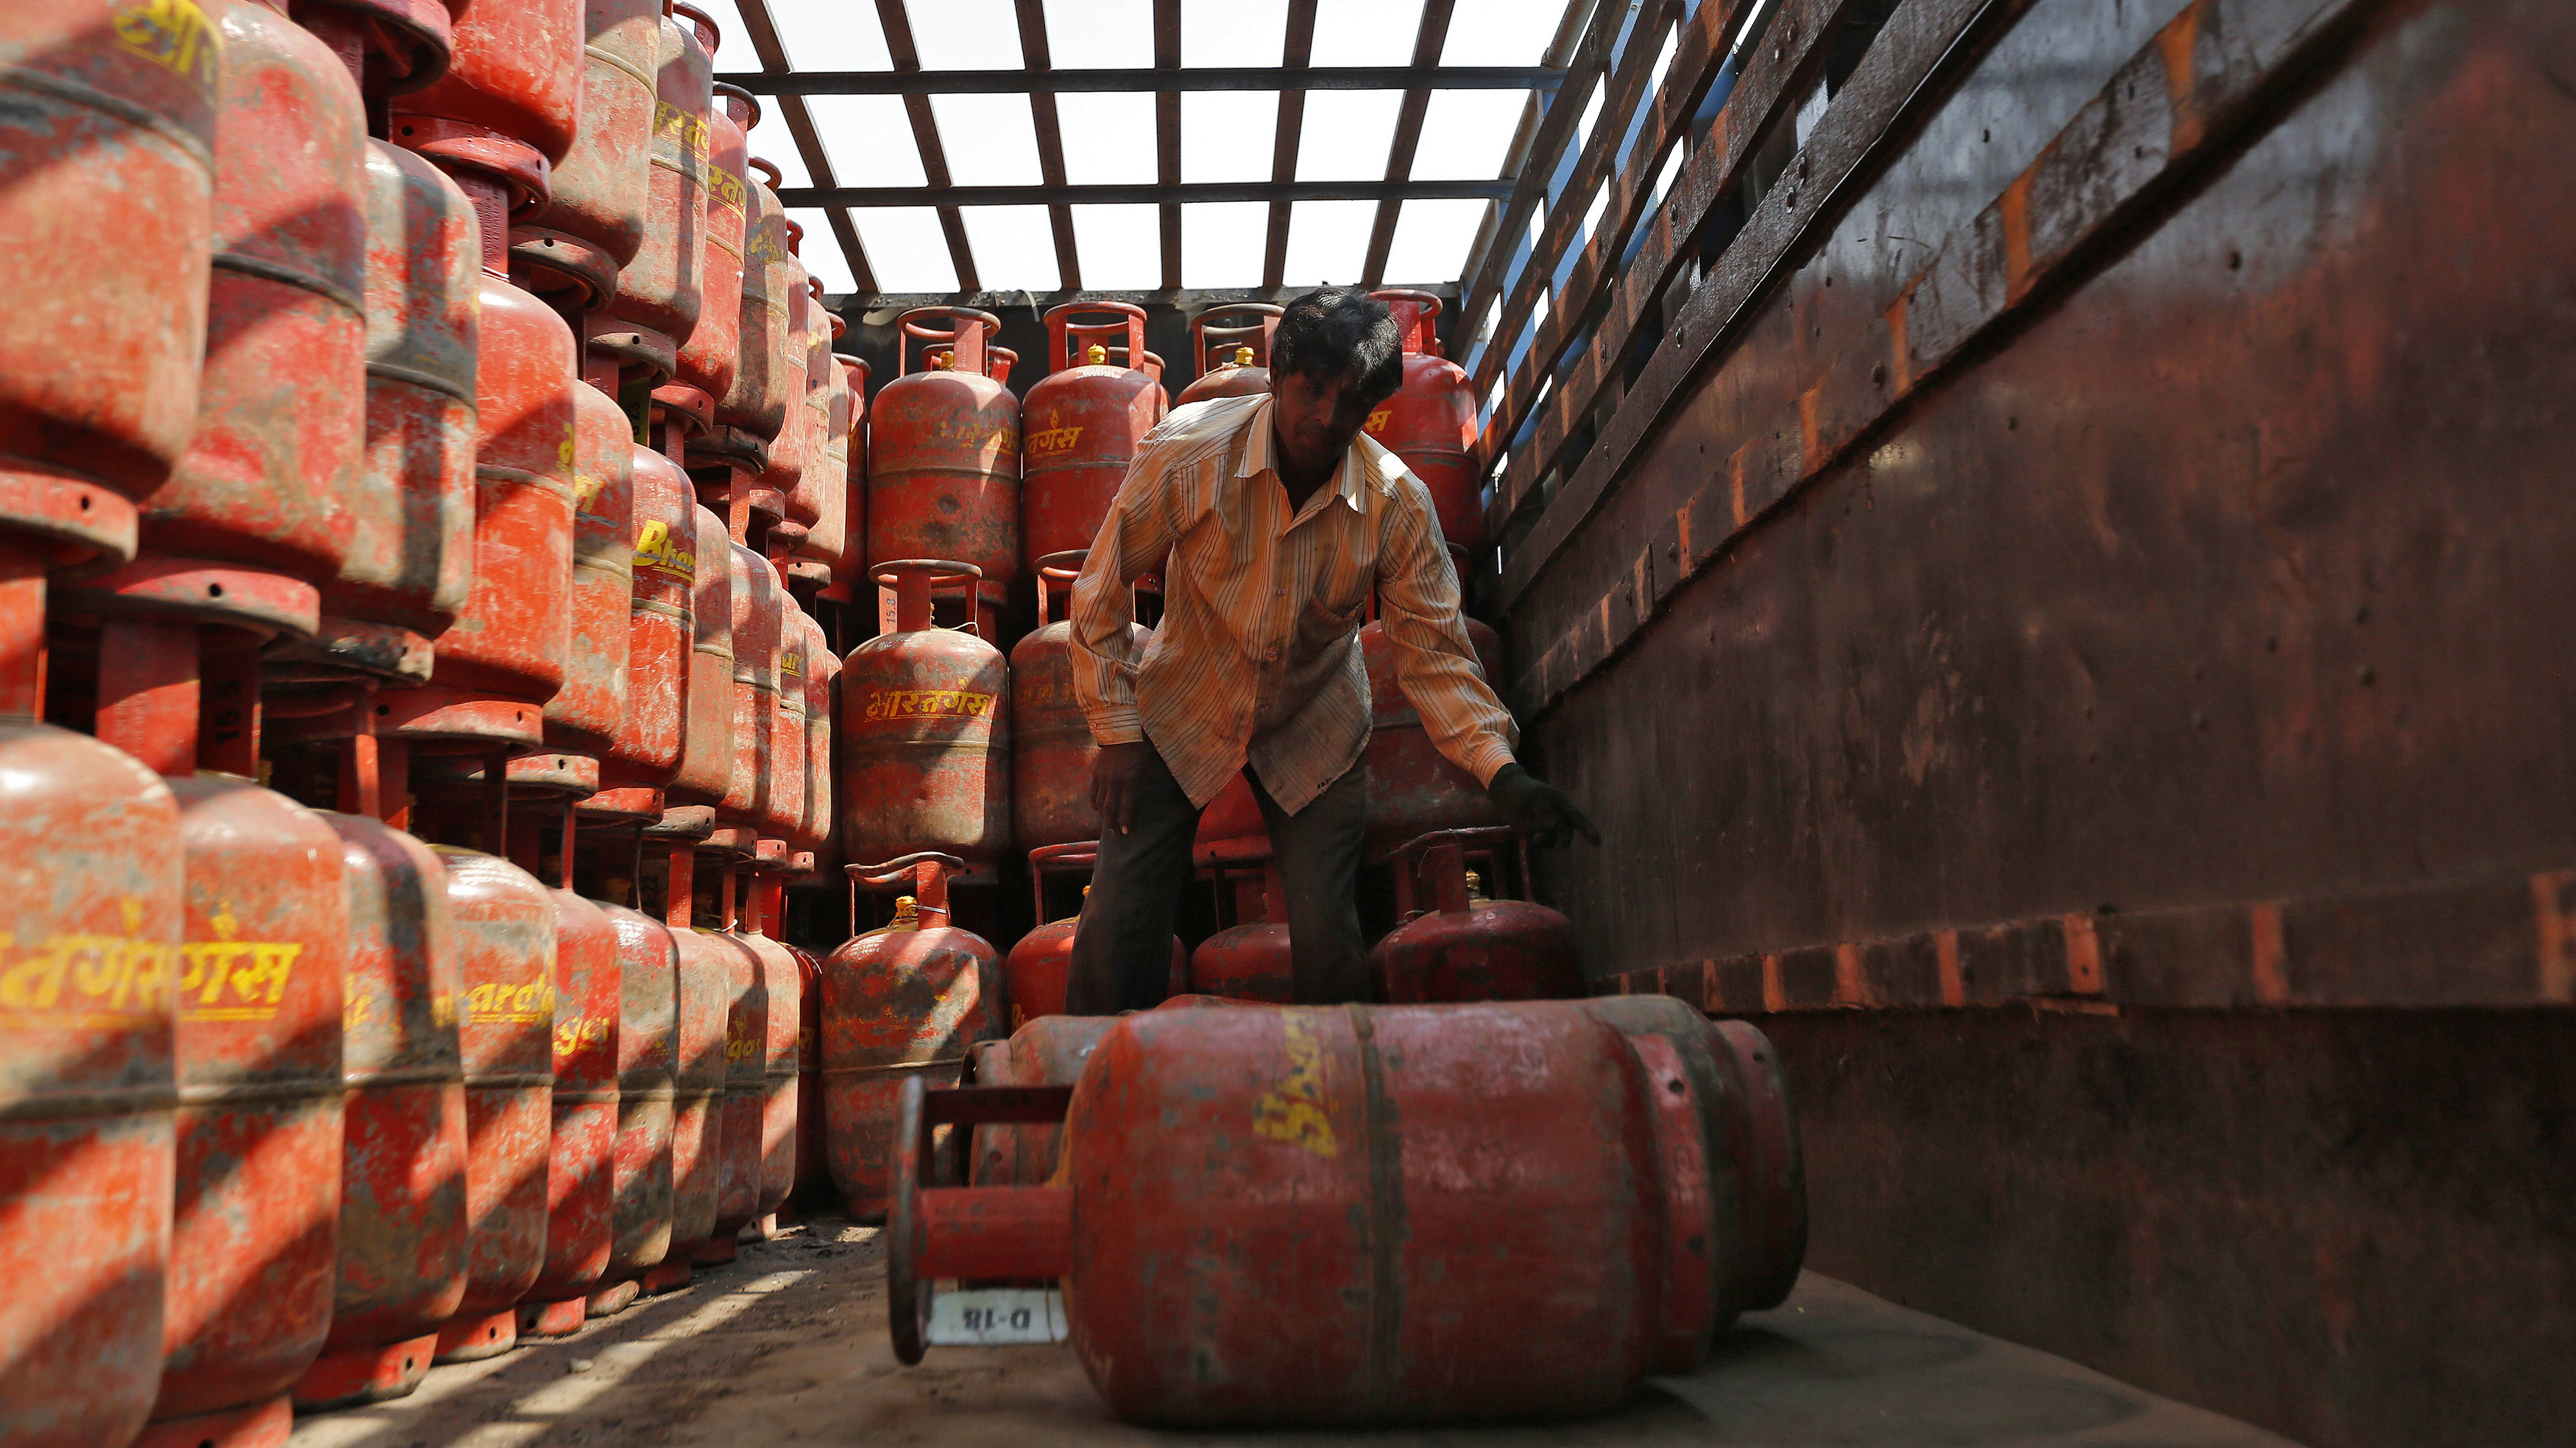 “Rs 21,000 crore saved in LPG subsidy under DBT scheme”